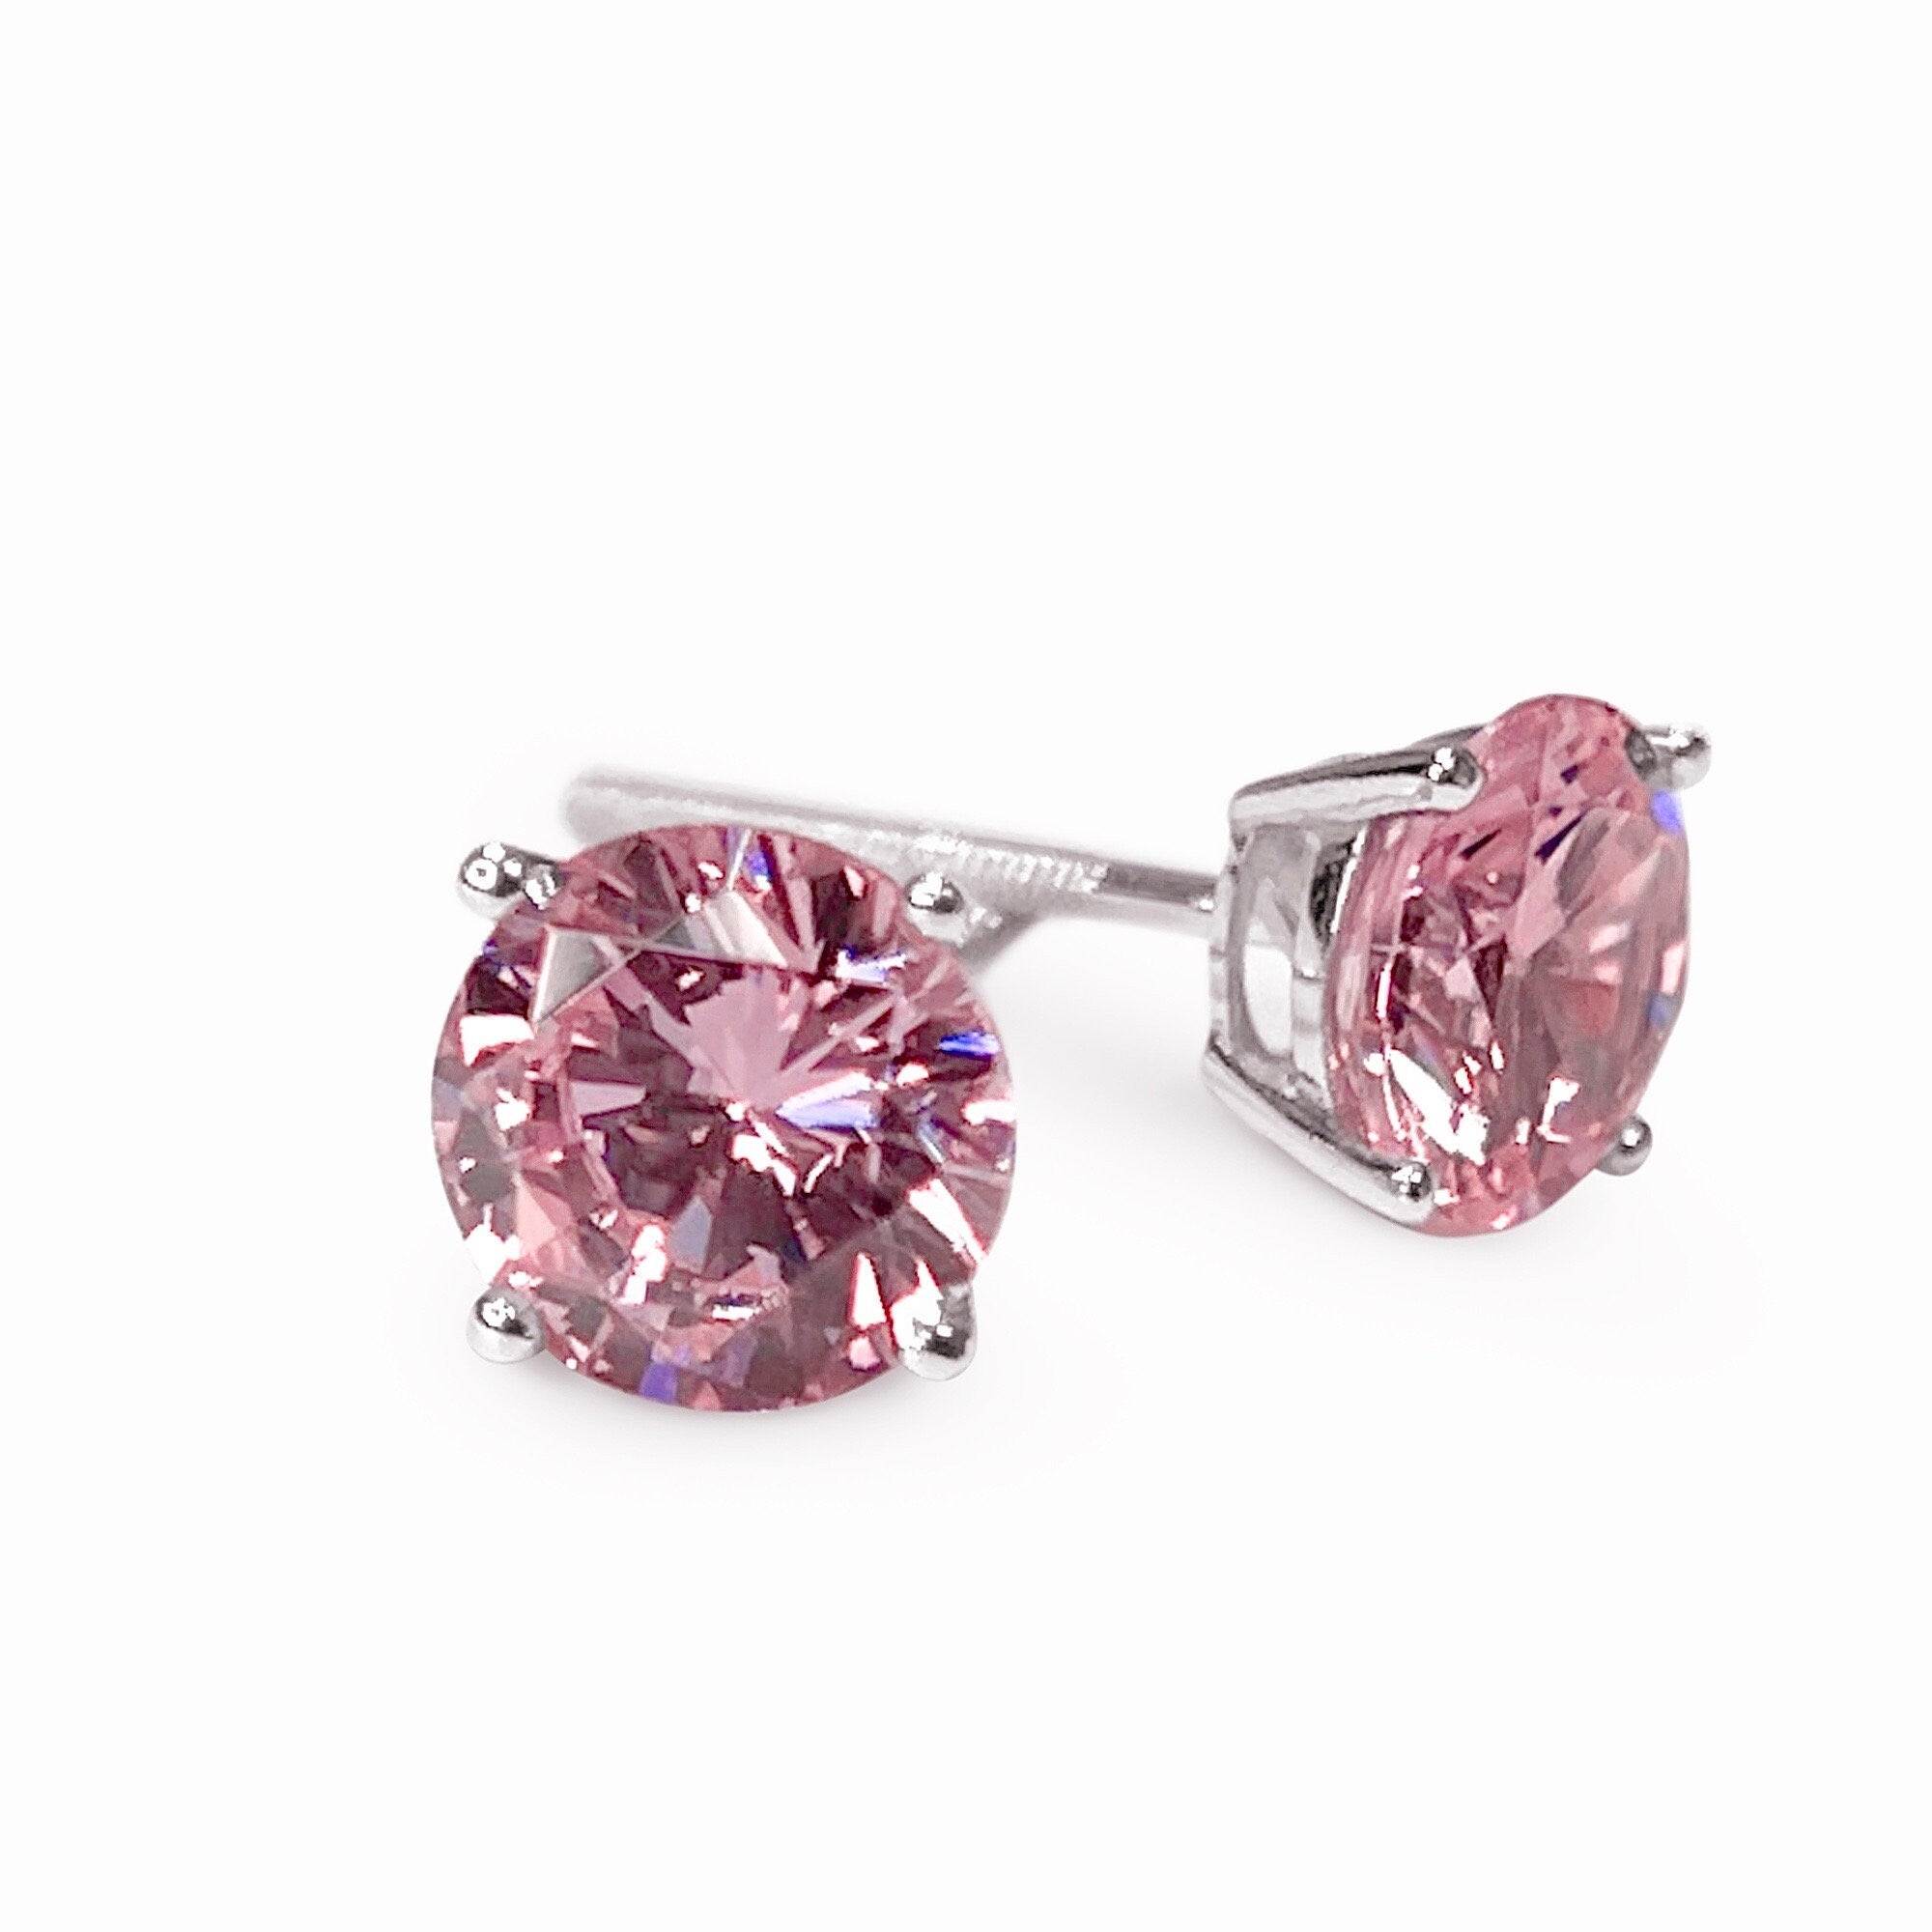 White Gold Diamond Studs, 3 Ct Round Created Pink Diamond Earrings